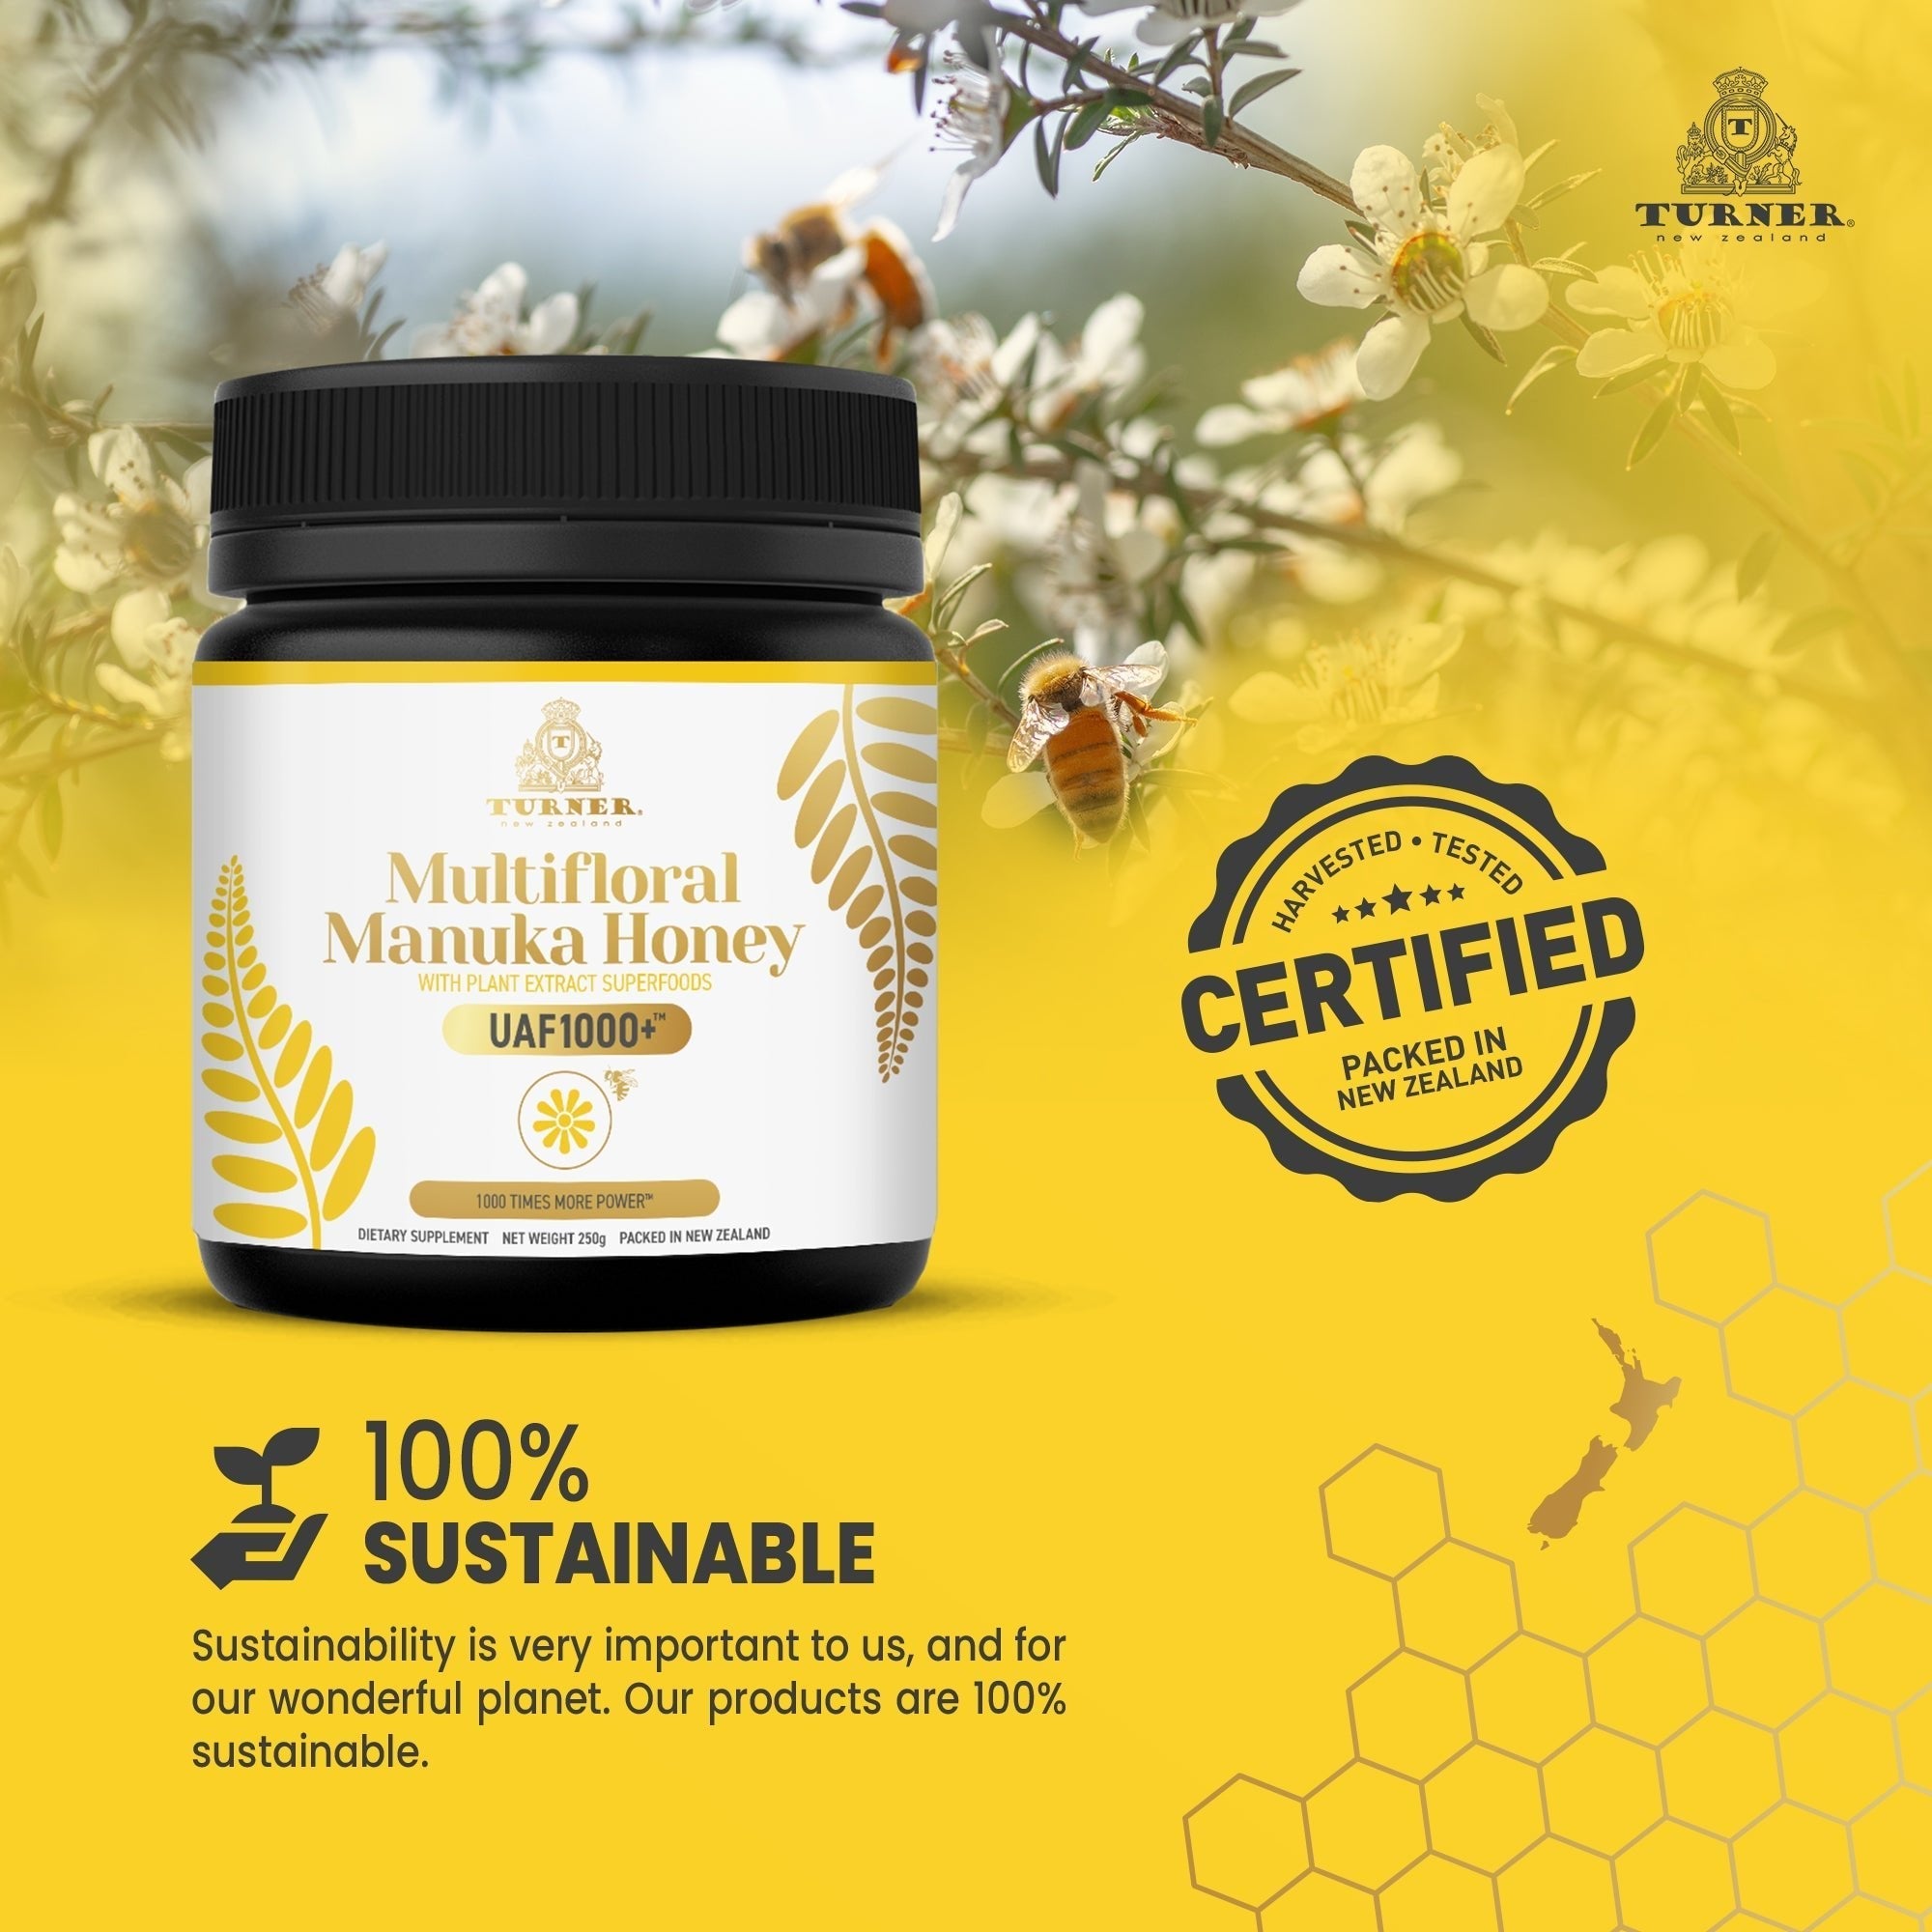 Multifloral Manuka Honey UAF1000+®, TURNER New Zealand, 